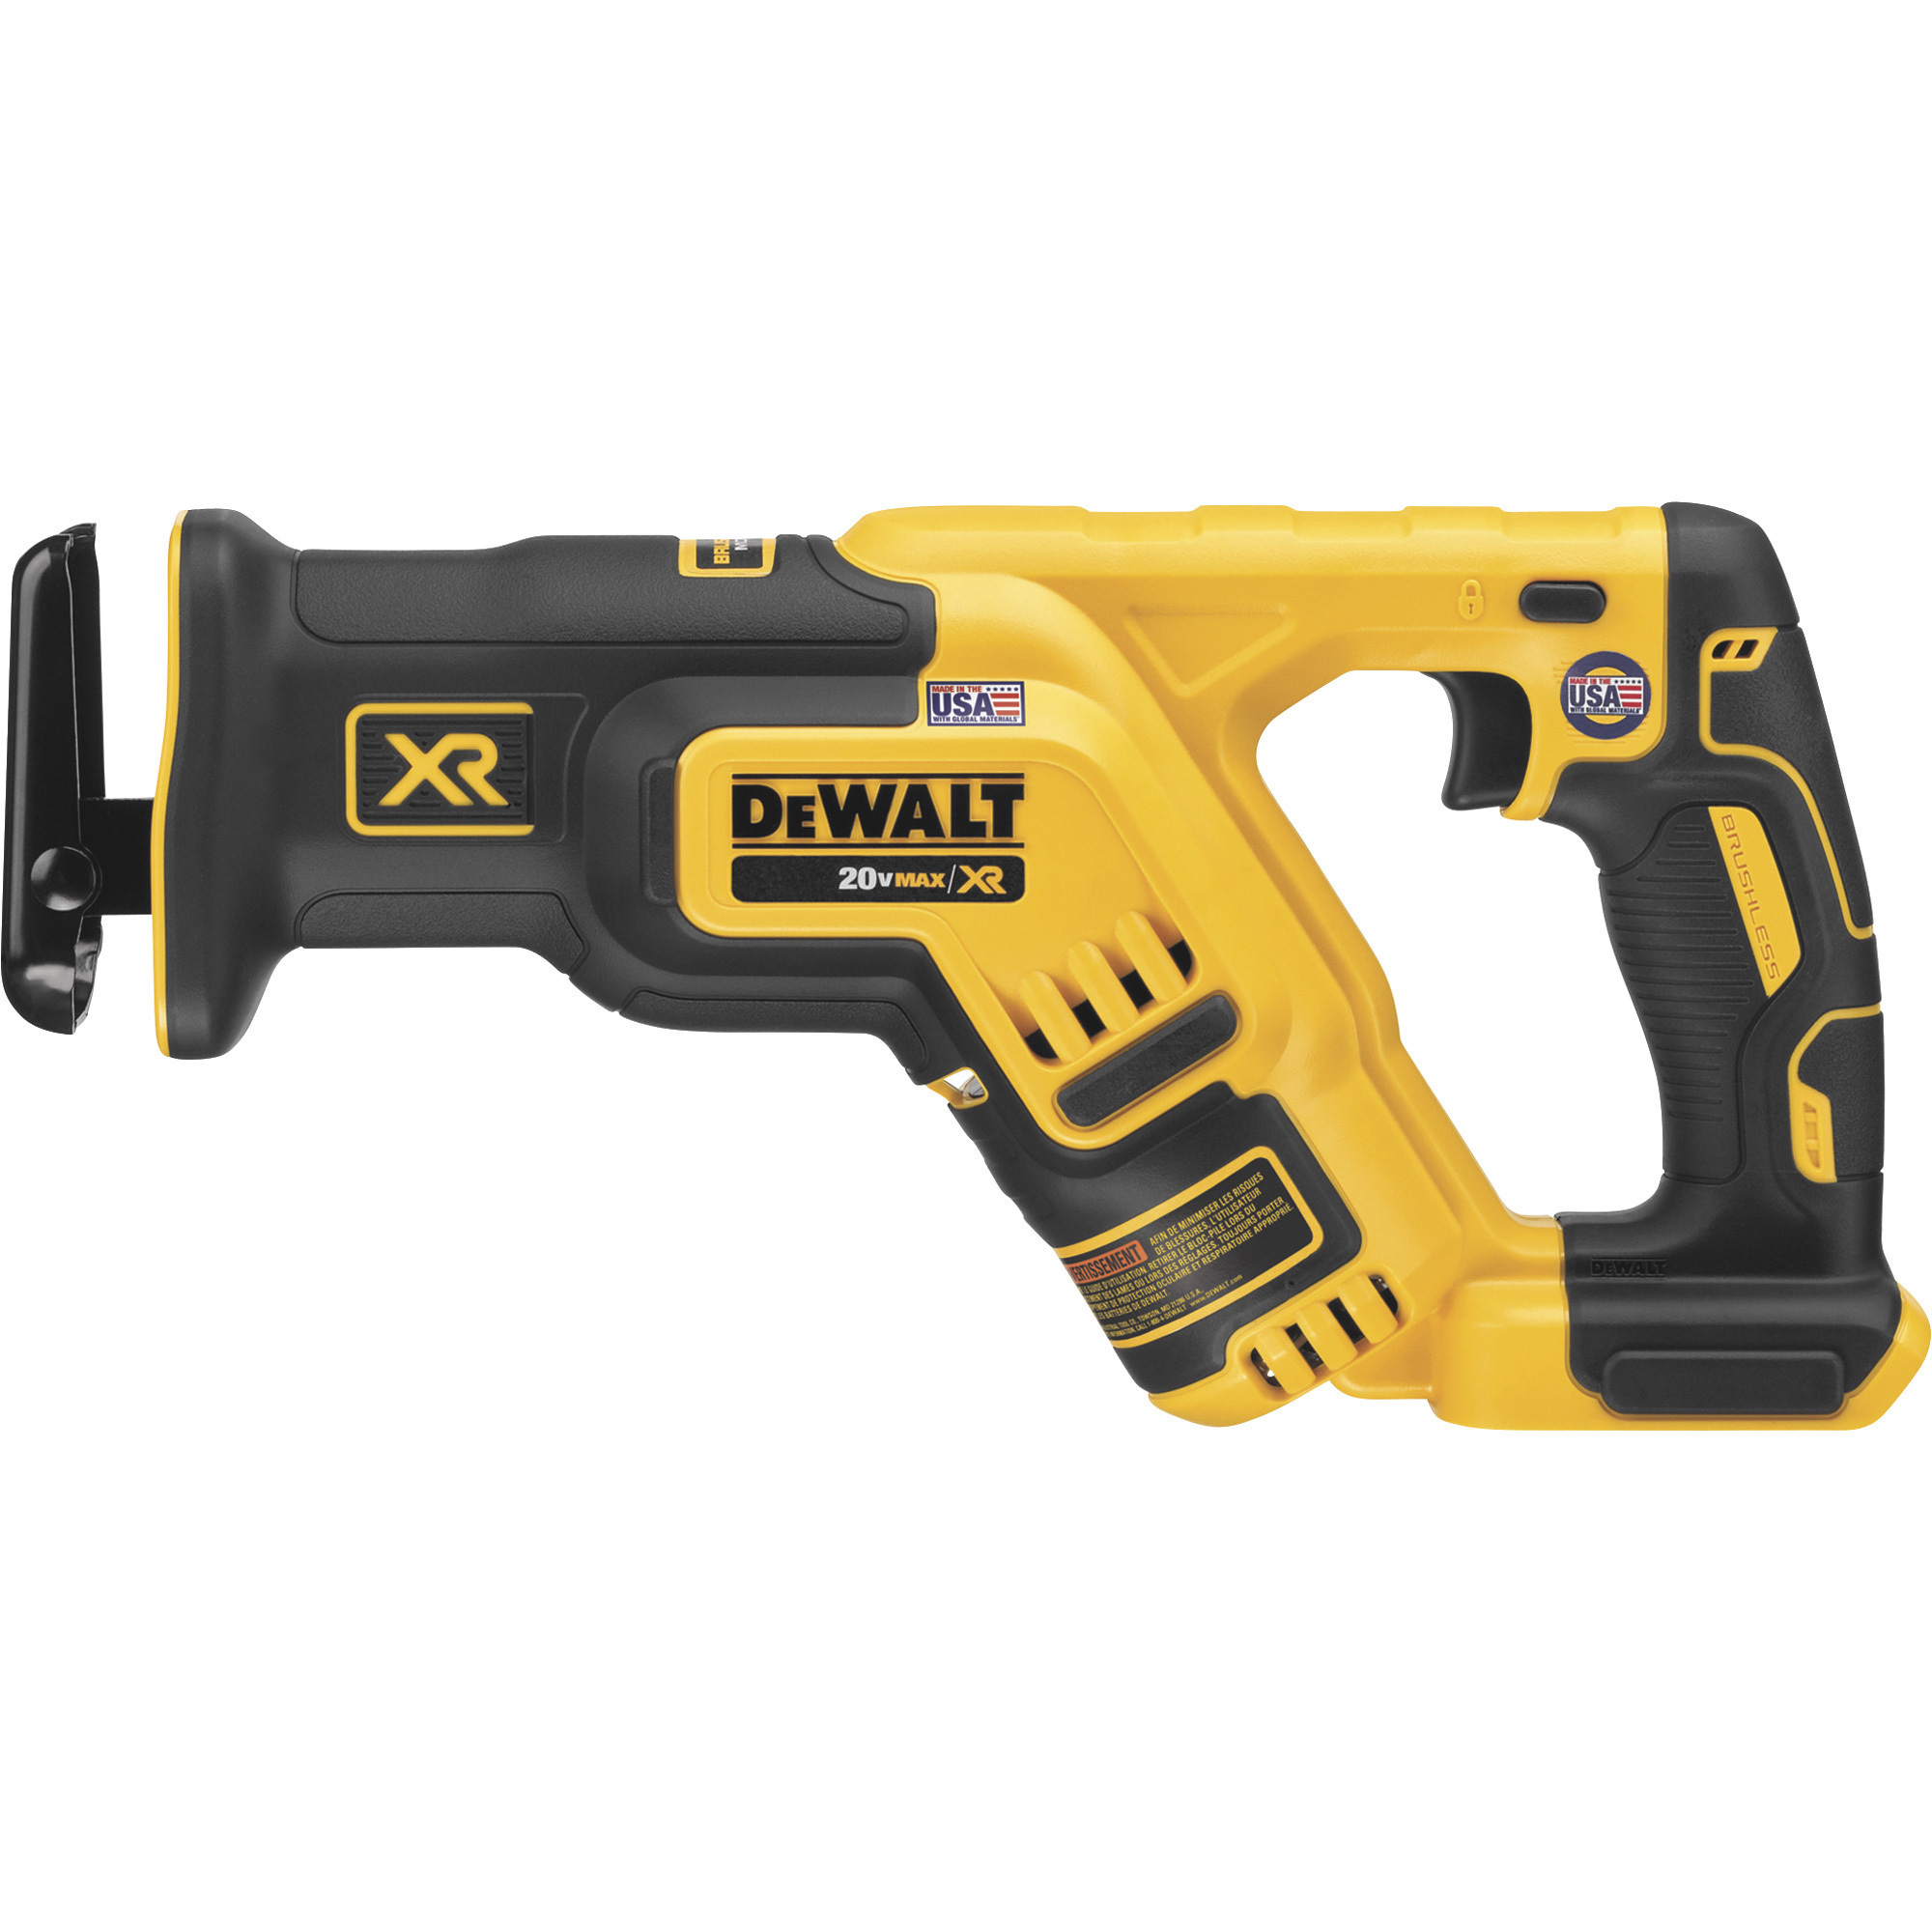 DEWALT 20V MAX XR Compact Reciprocating Saw, Tool Only, Model DCS367B